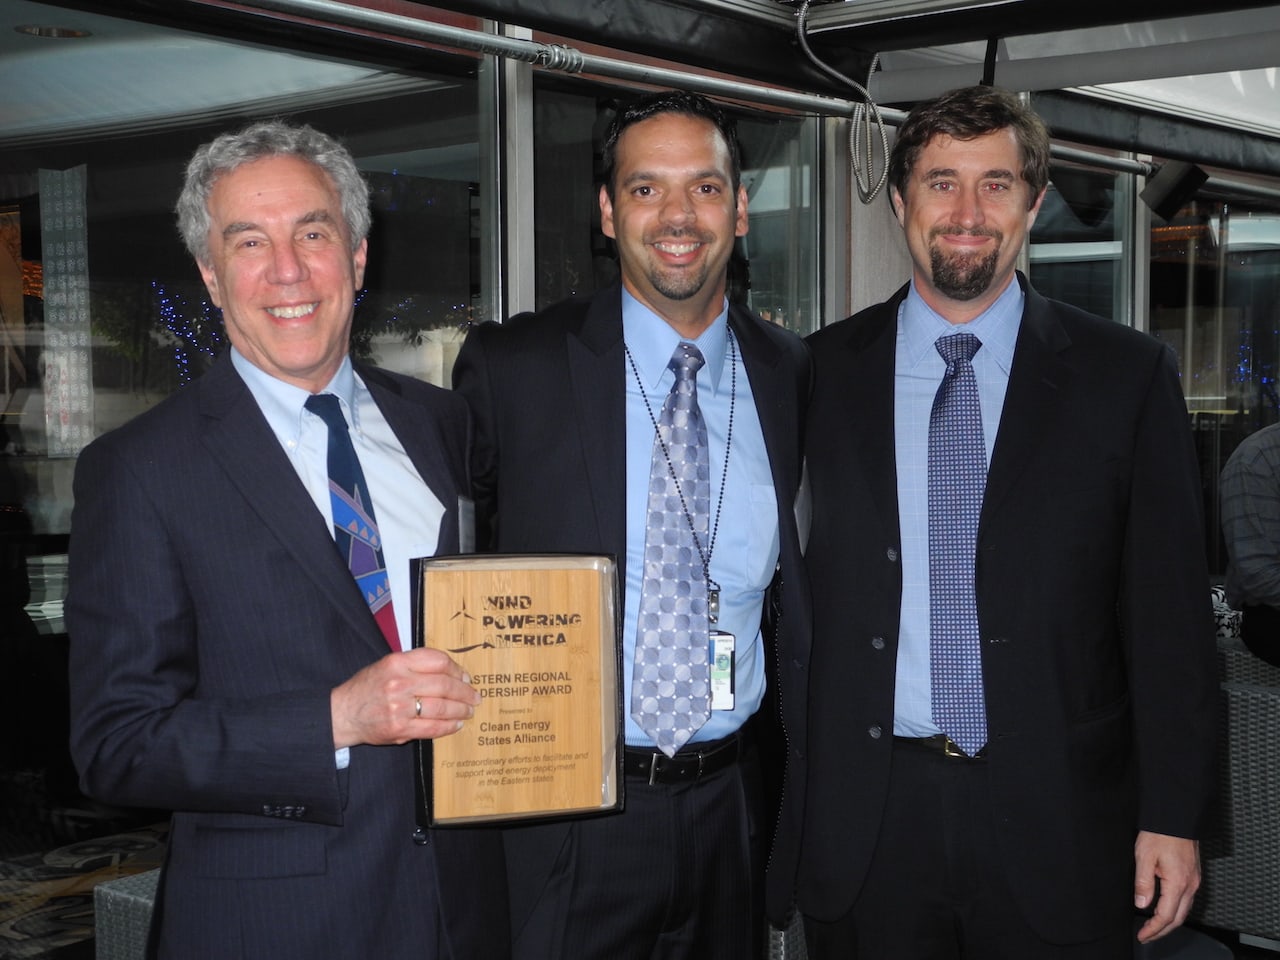 CESA Executive Director Warren Leon accepts the 2013 Wind Powering America Eastern Regional Leadership Award